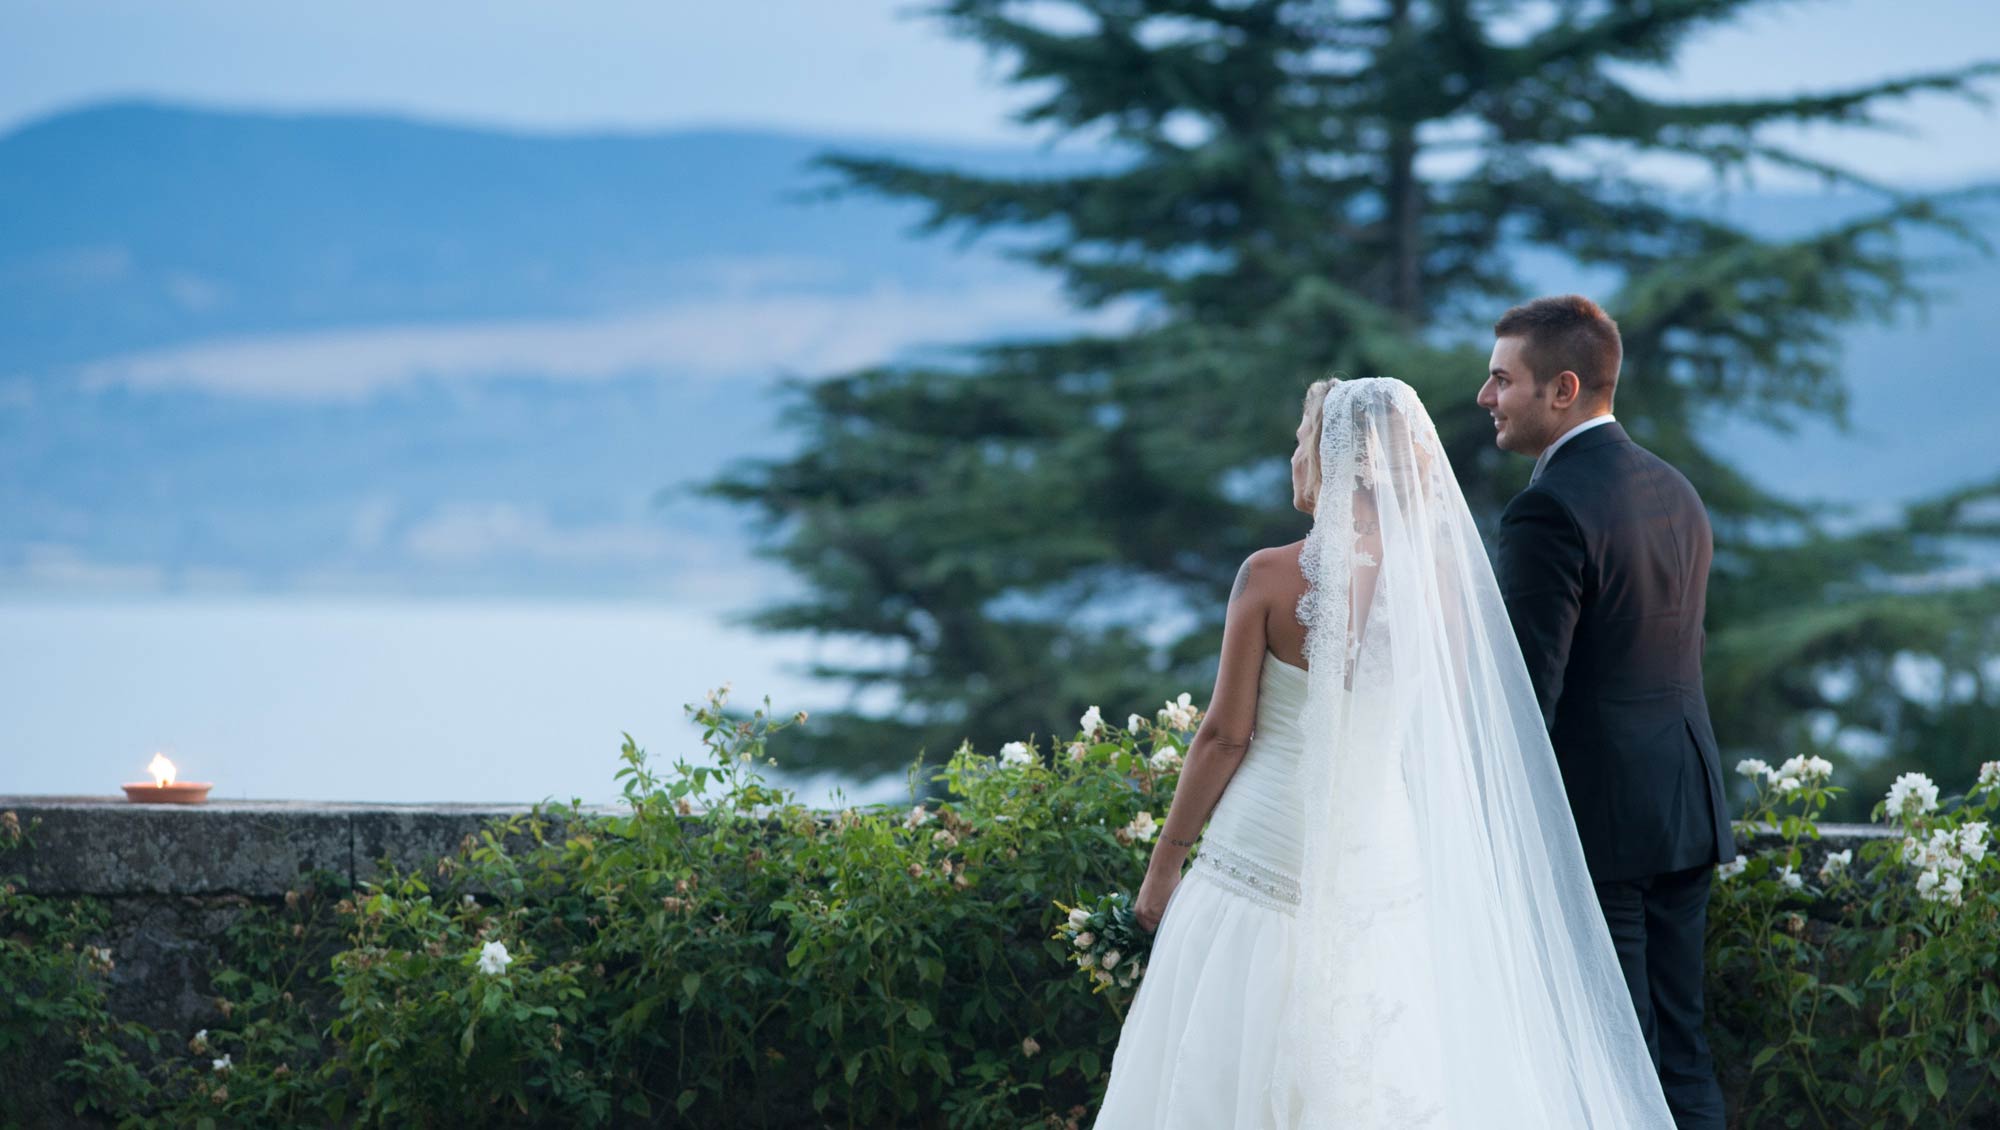 Lake Bracciano weddings